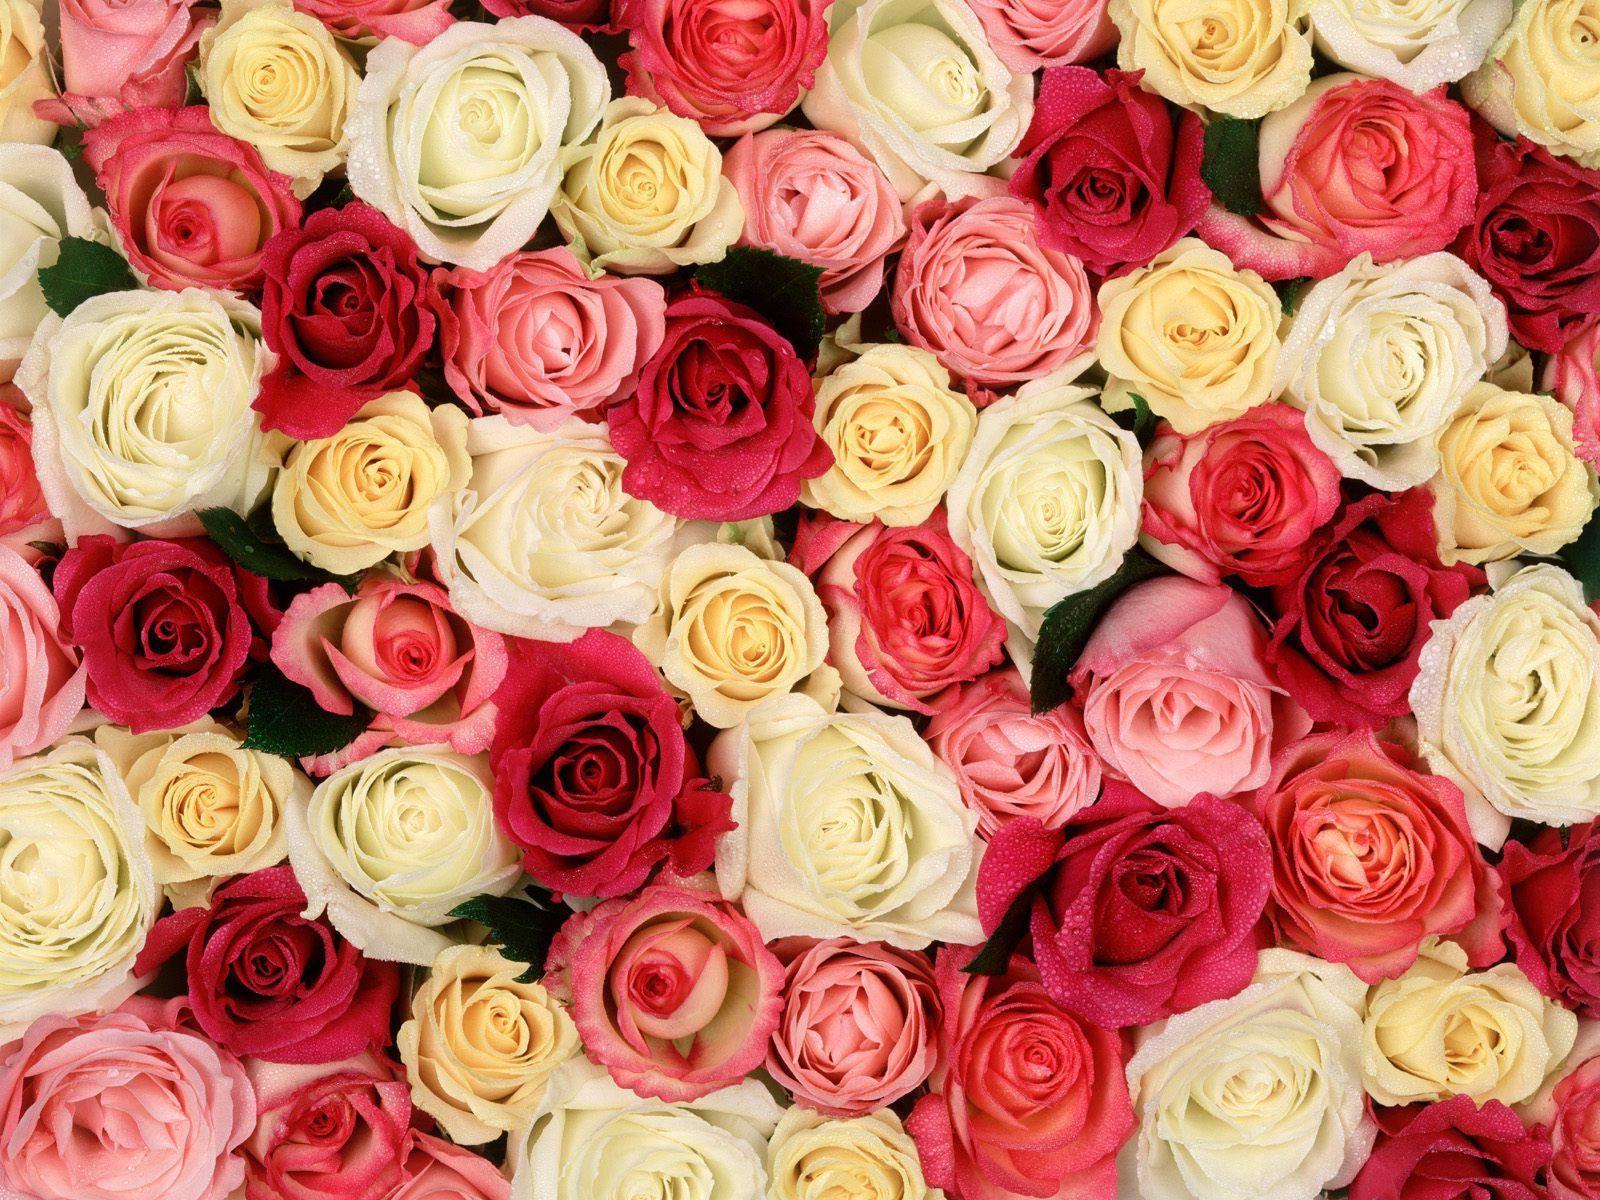 Roses Background Quality Image